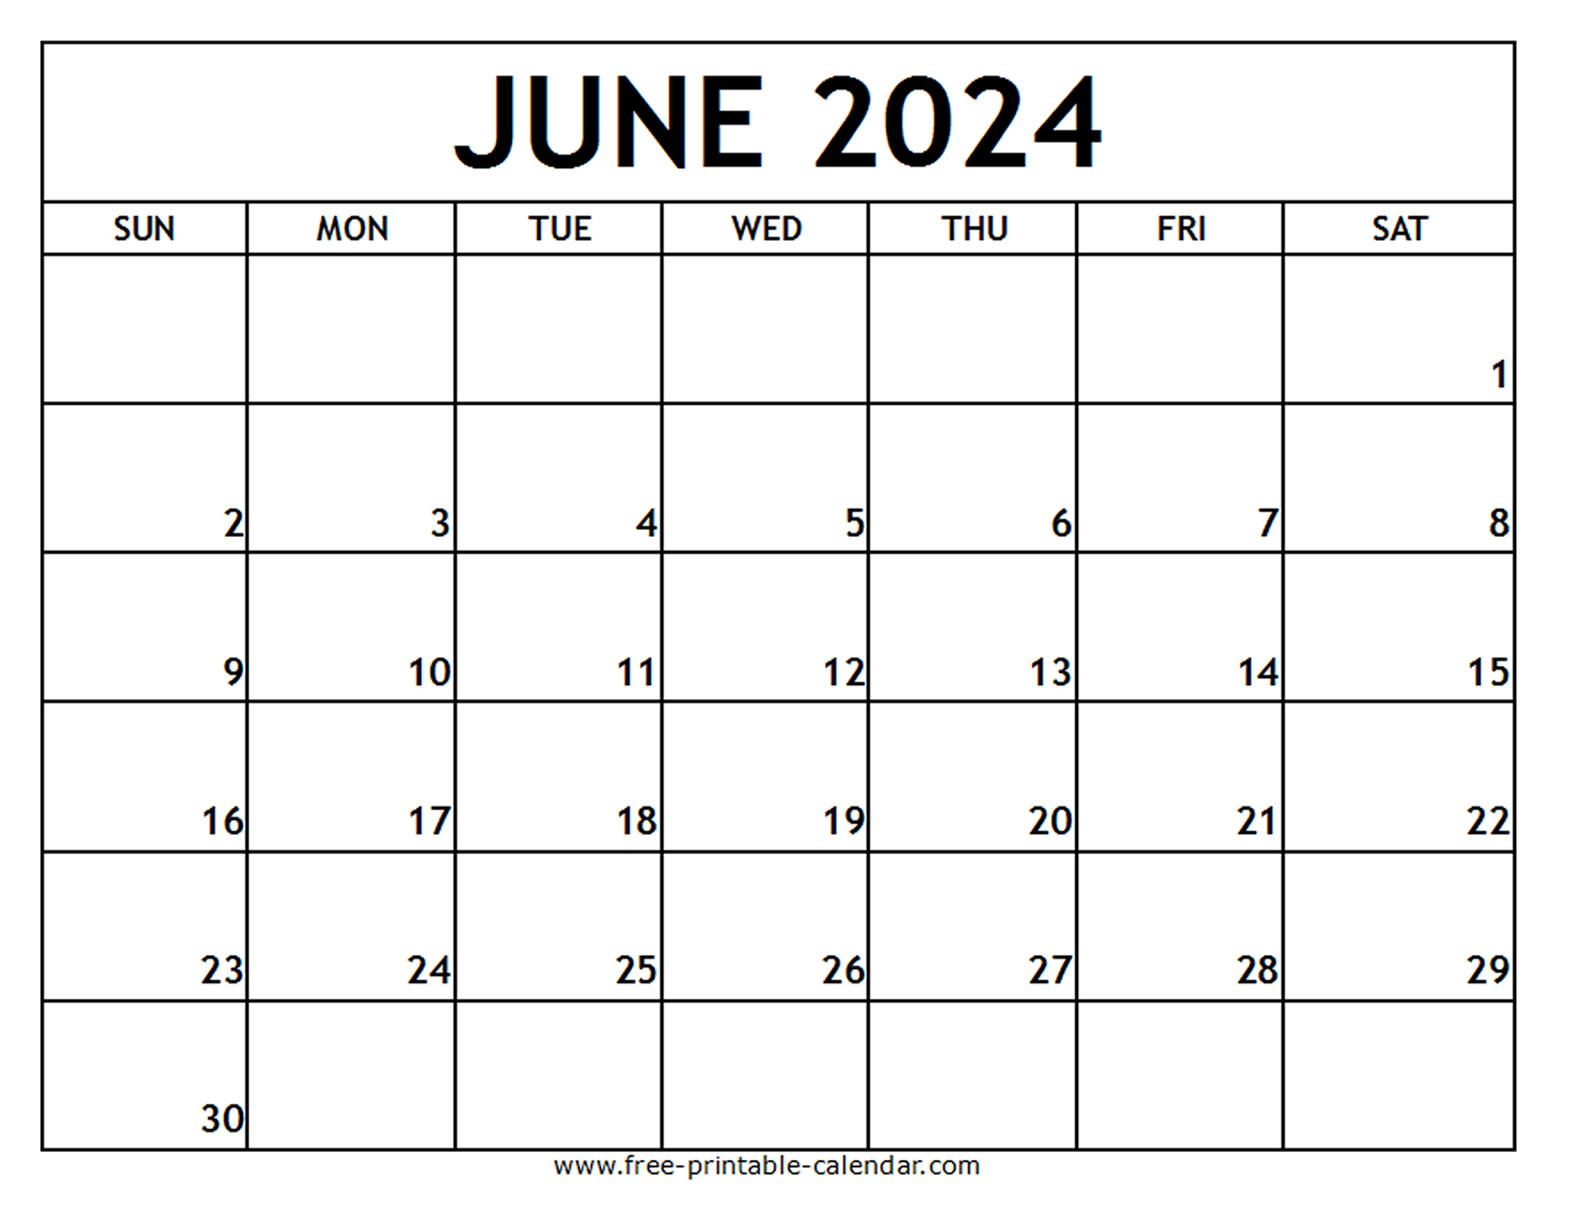 June 2024 Printable Calendar - Free-Printable-Calendar for Free Editable June 2024 Calendar